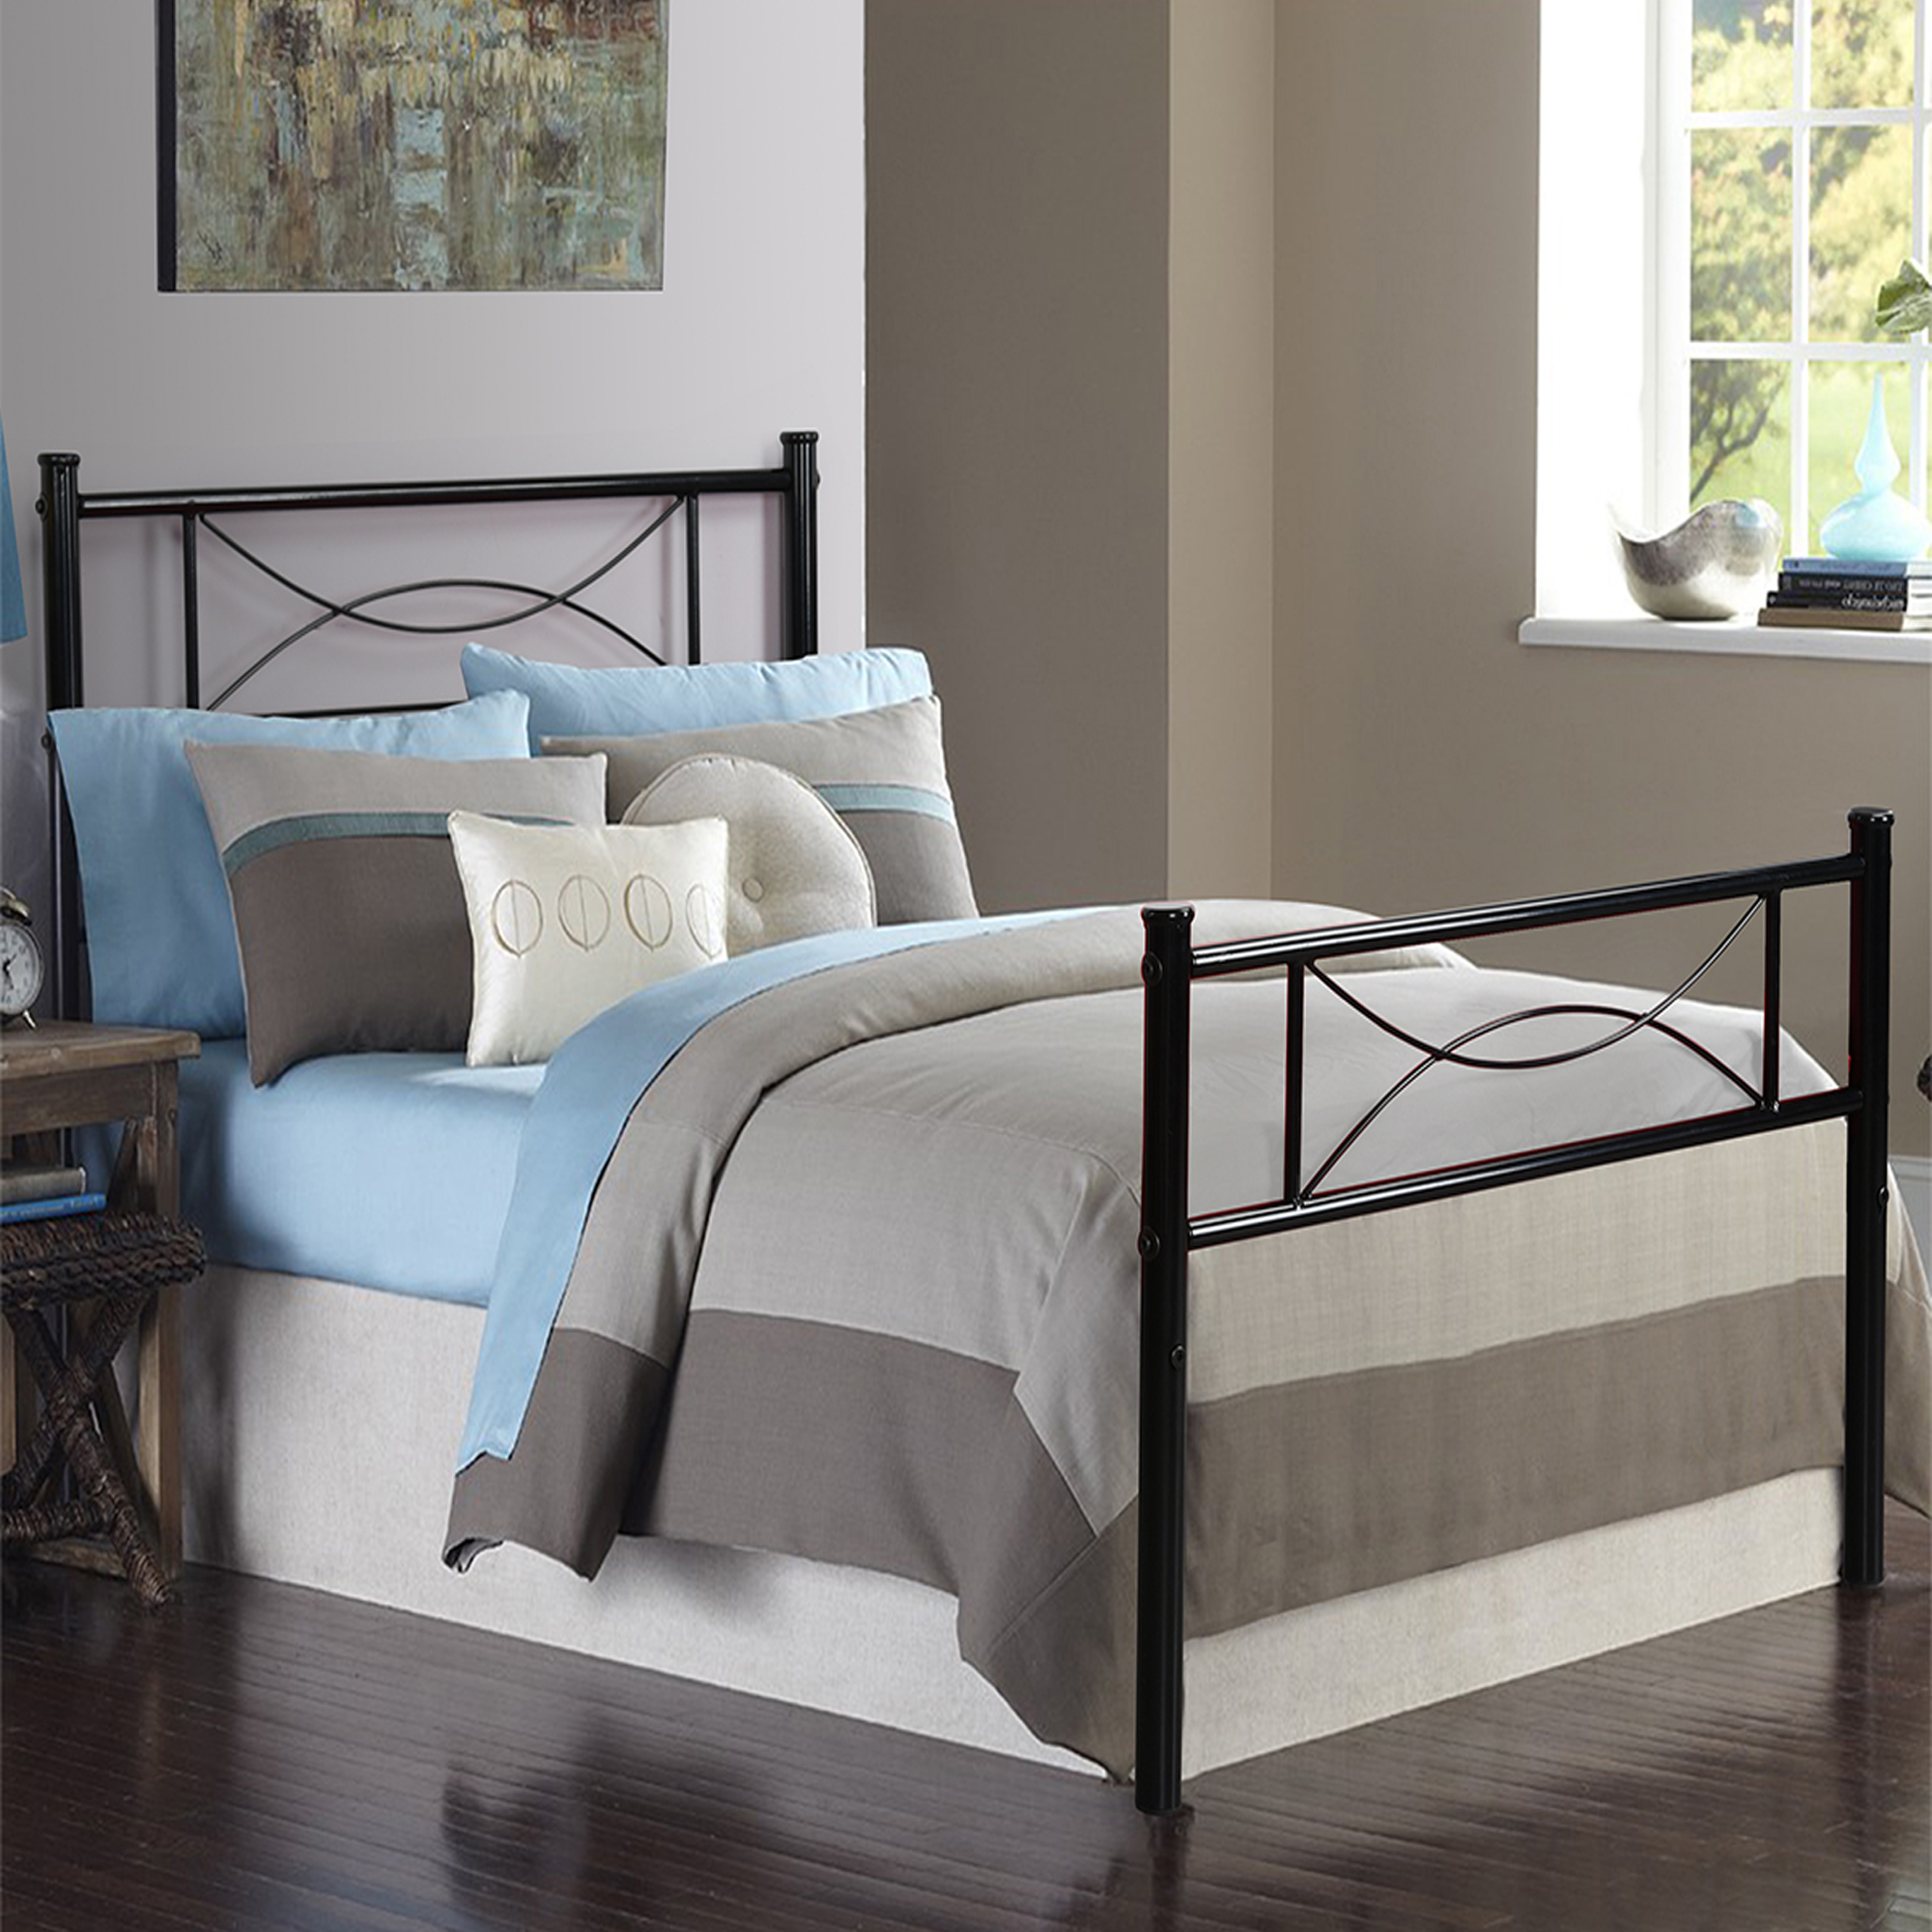 Furniture R Bedroom Metal Bed Frame, How To Put Together A Metal Bed Frame Full Size